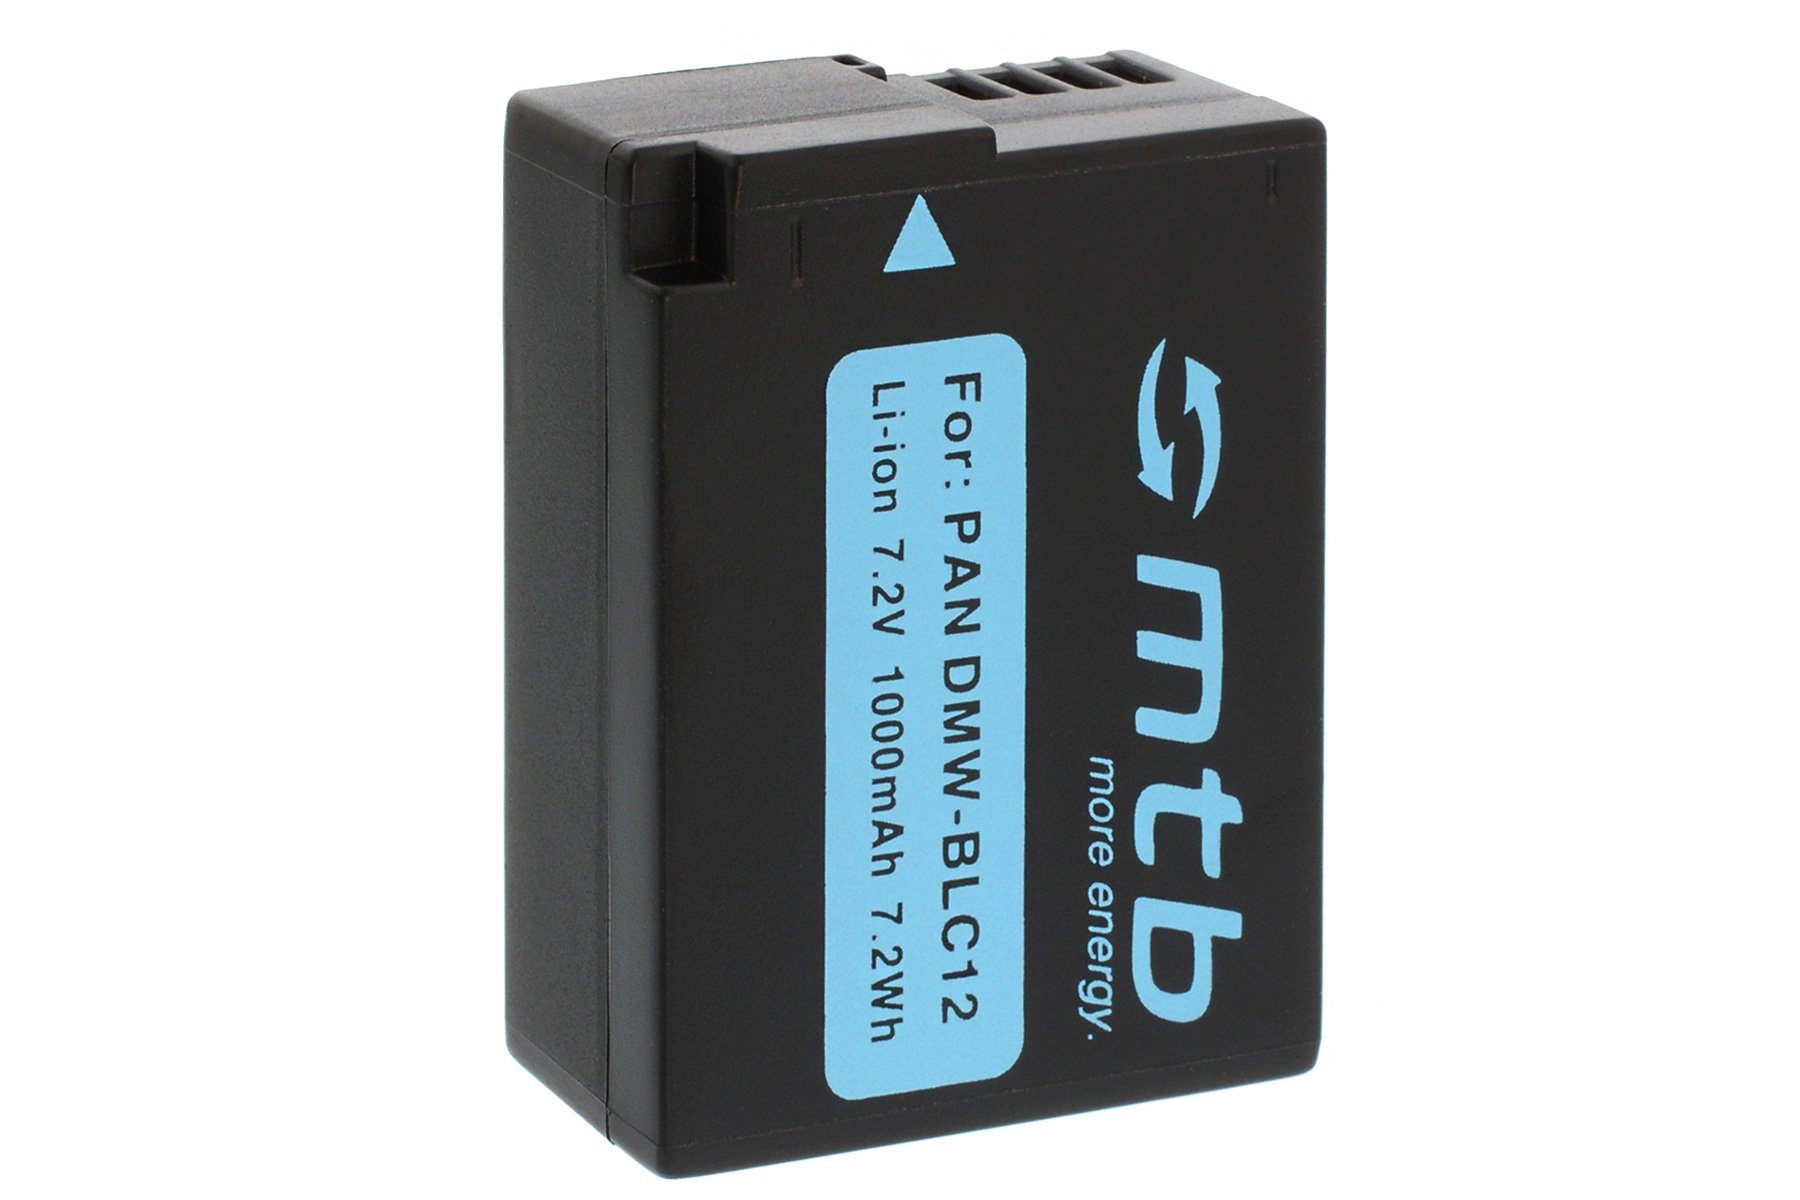 [BAT-262 mAh mtb passend FZ1000 Li-Ion] Lumix kompatibel für: Akku-Typ mit Kamera-Akku (7,2 FZ1000, more Panasonic - 1000 II, DMW-BLC12 Panasonic energy V), DMC-FZ200, FZ2000… FZ300,